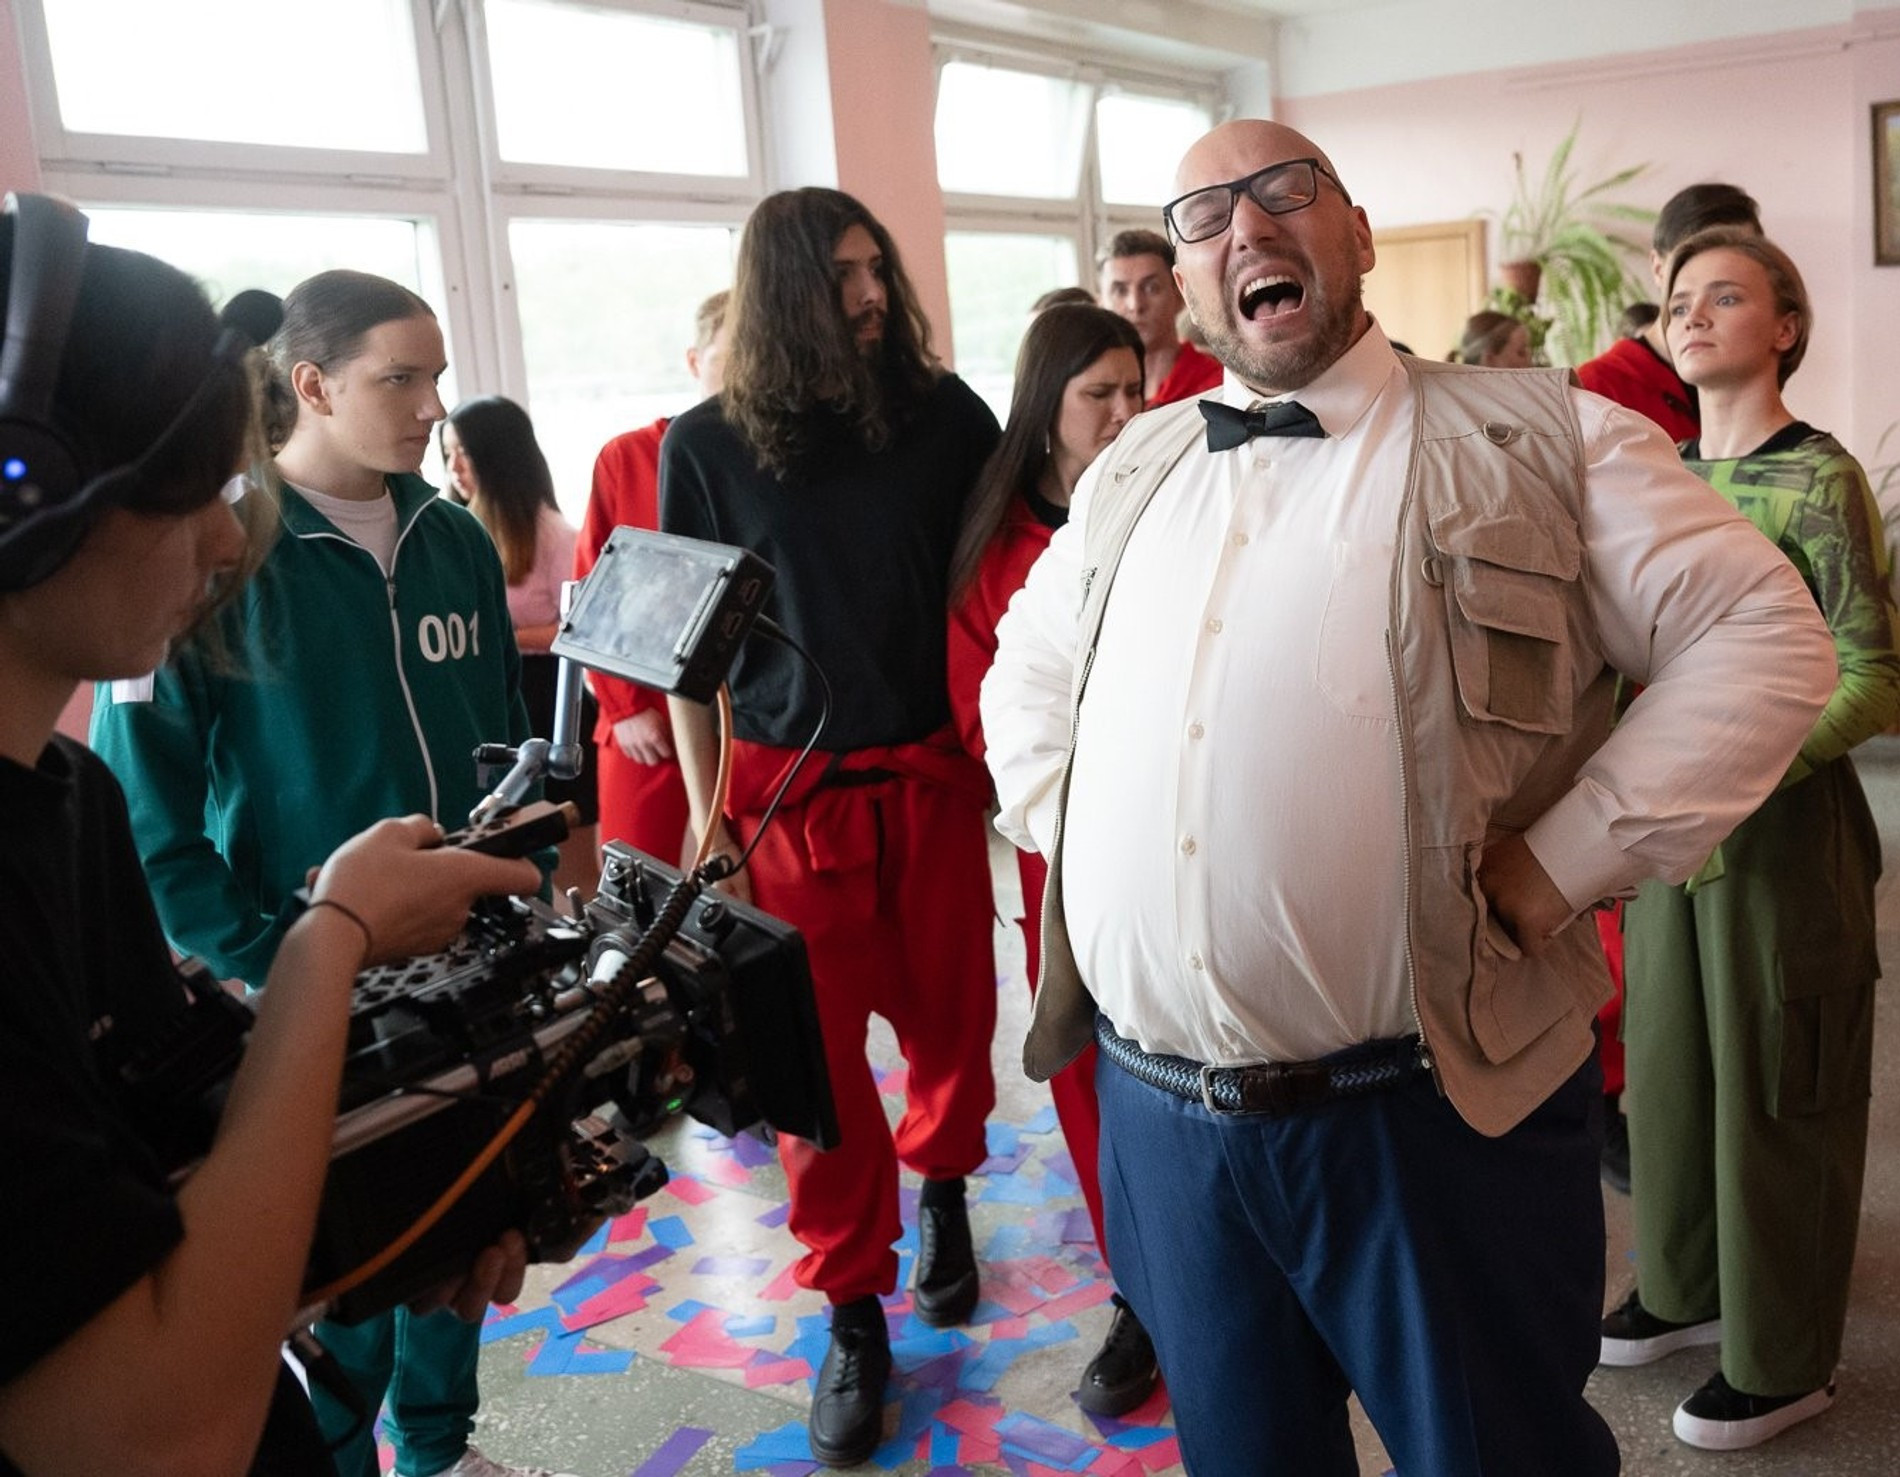 Владимир Маркони на съемочной площадке комедийного мюзикла «Танцуй, пока молодой». Фото: Кино Mail.ru